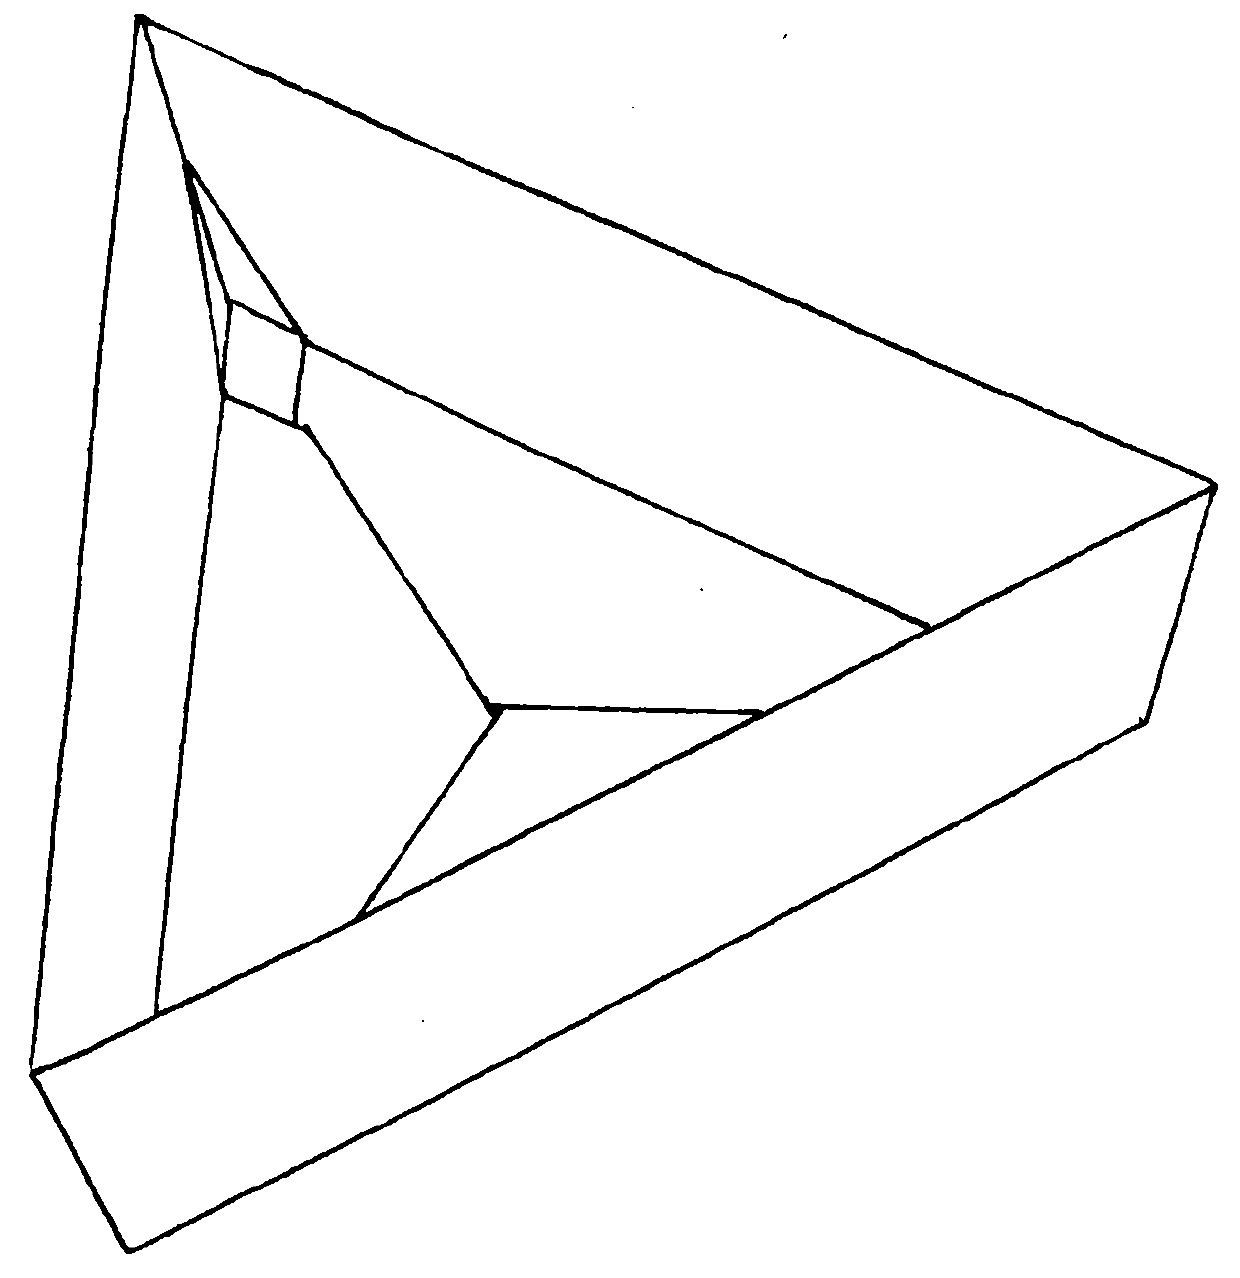 Method for folding triangular box with overlying box bottom